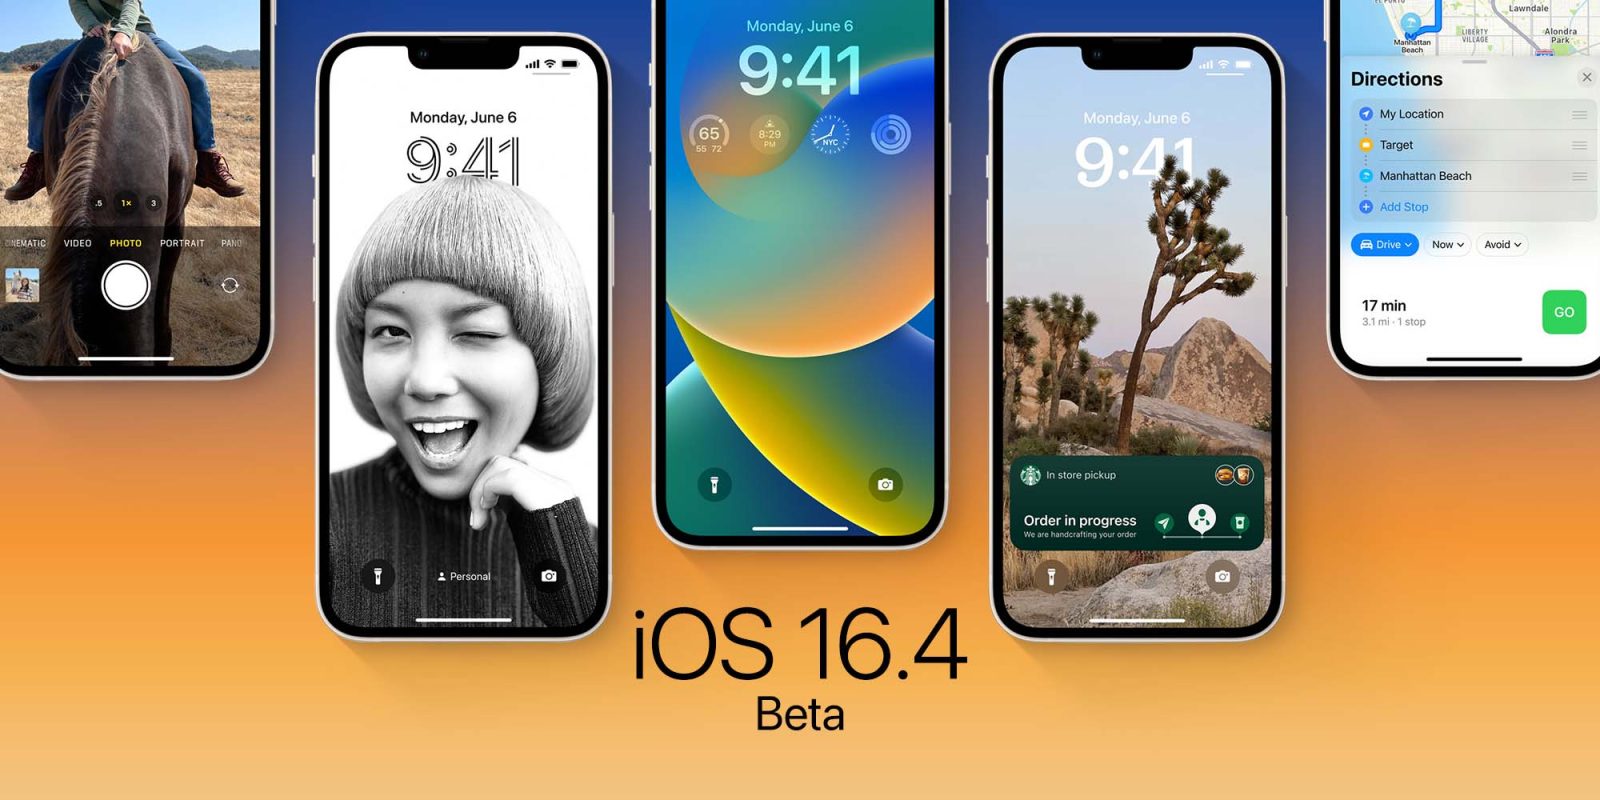 iOS 16.4 beta